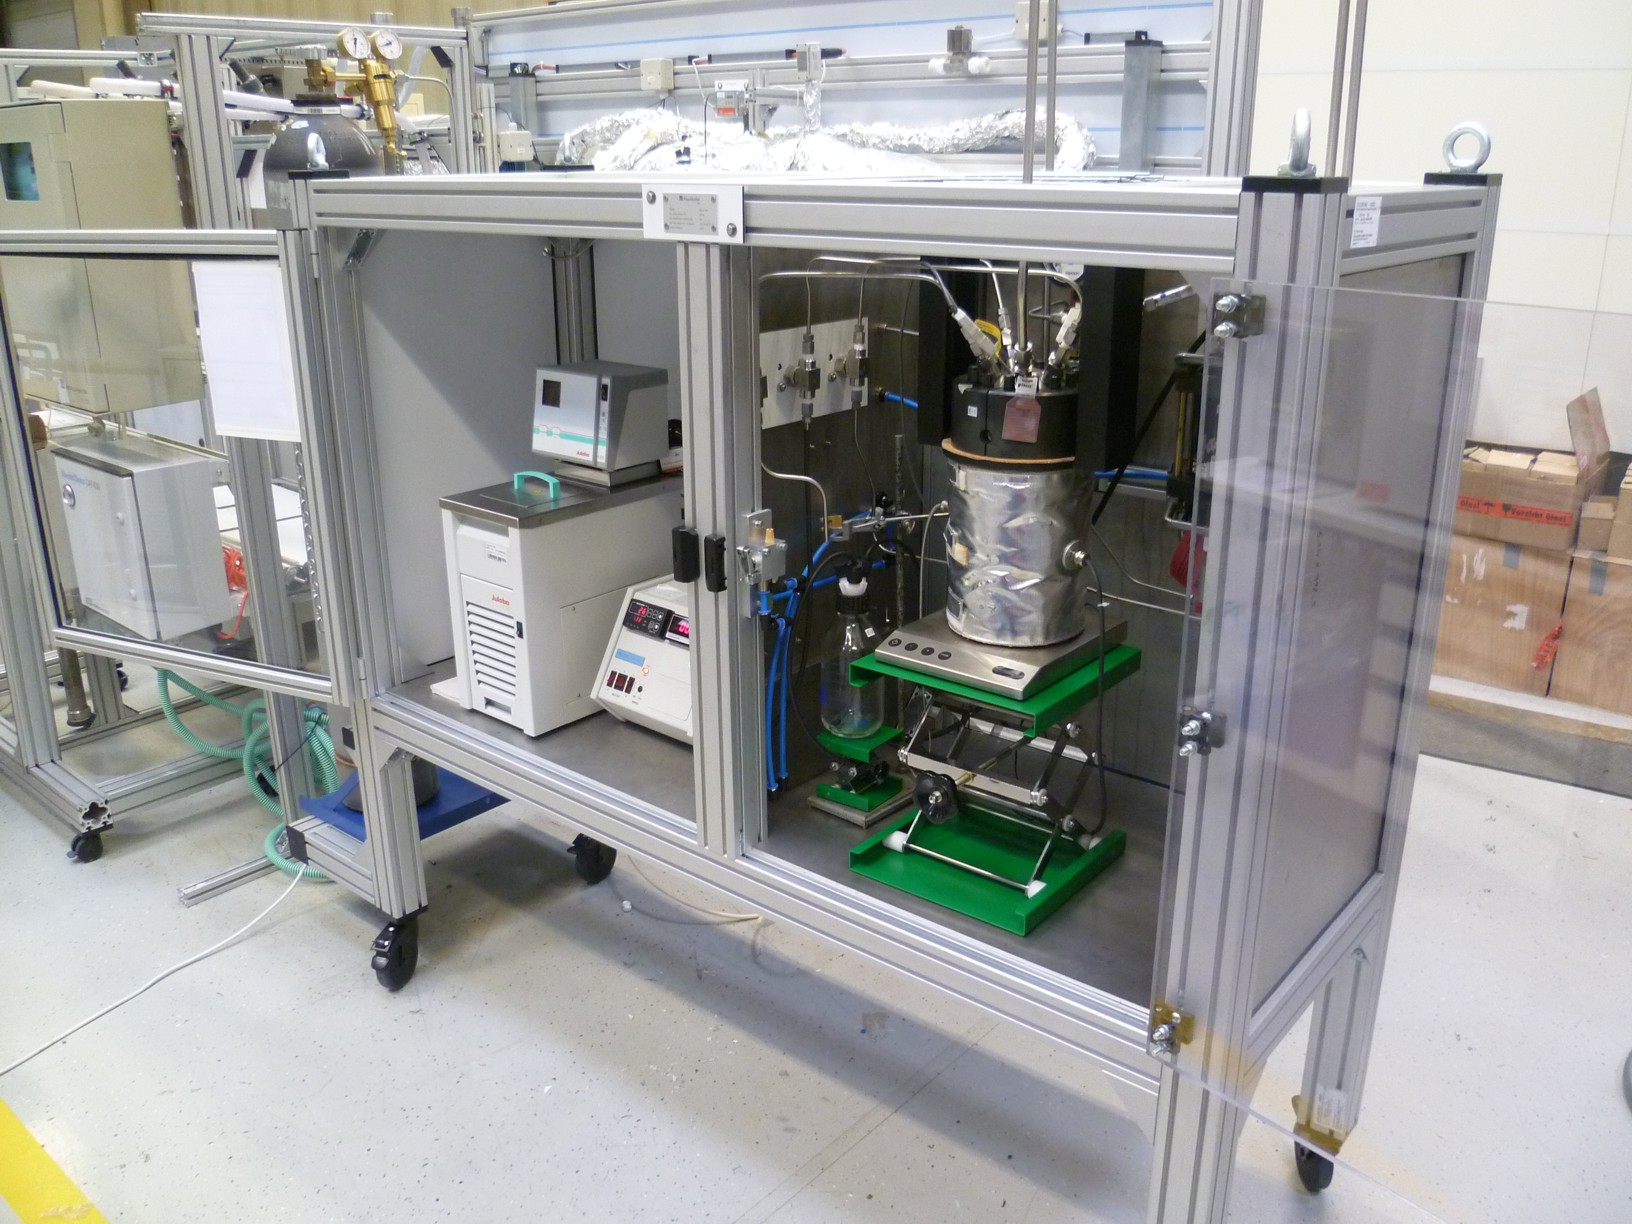 Batch unit using pressure change technology to treat liquids.